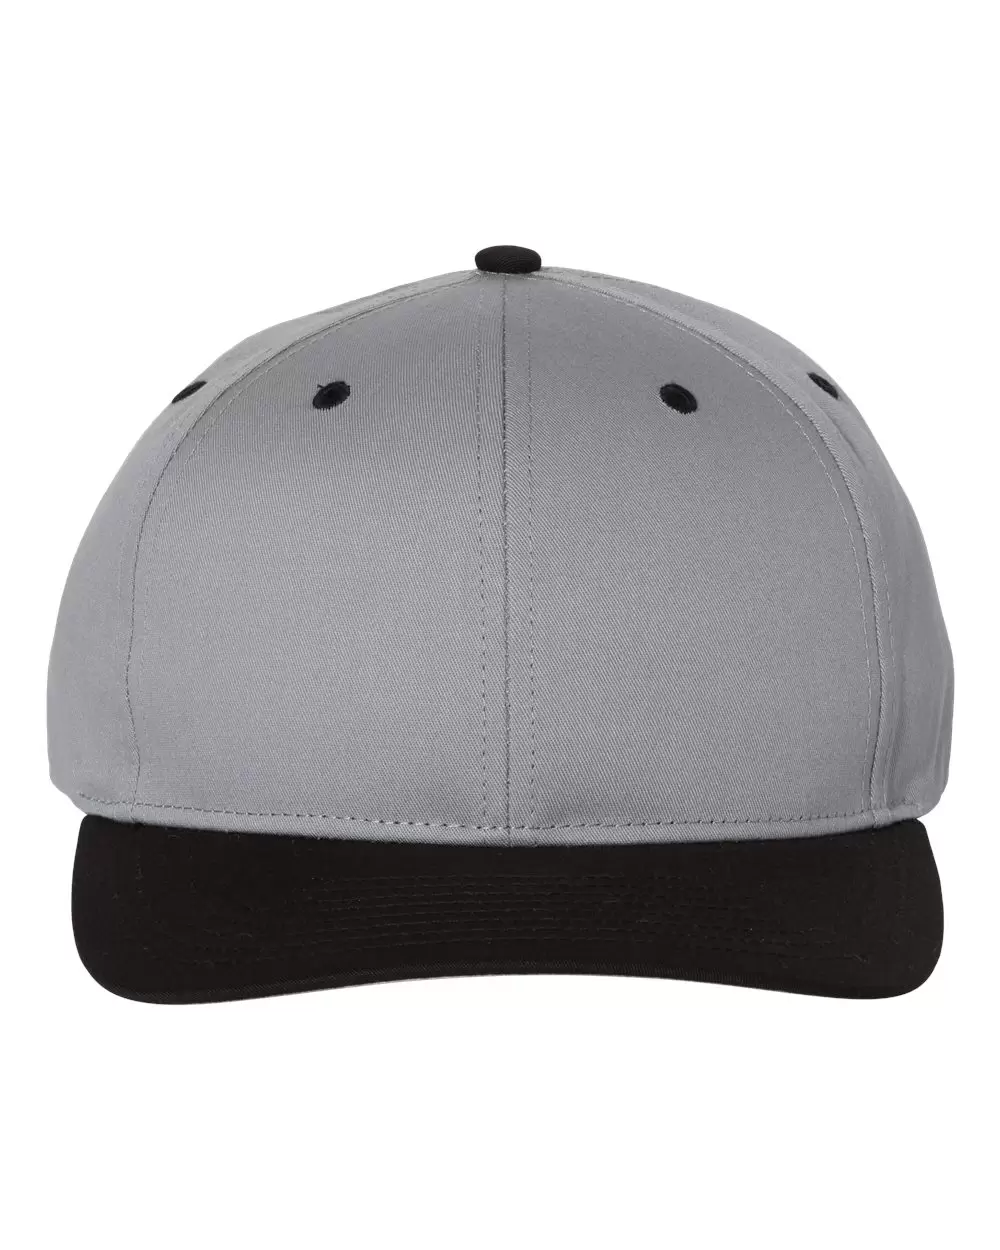 Snapback Cap Richardson Pro Twill Hats From 212 -